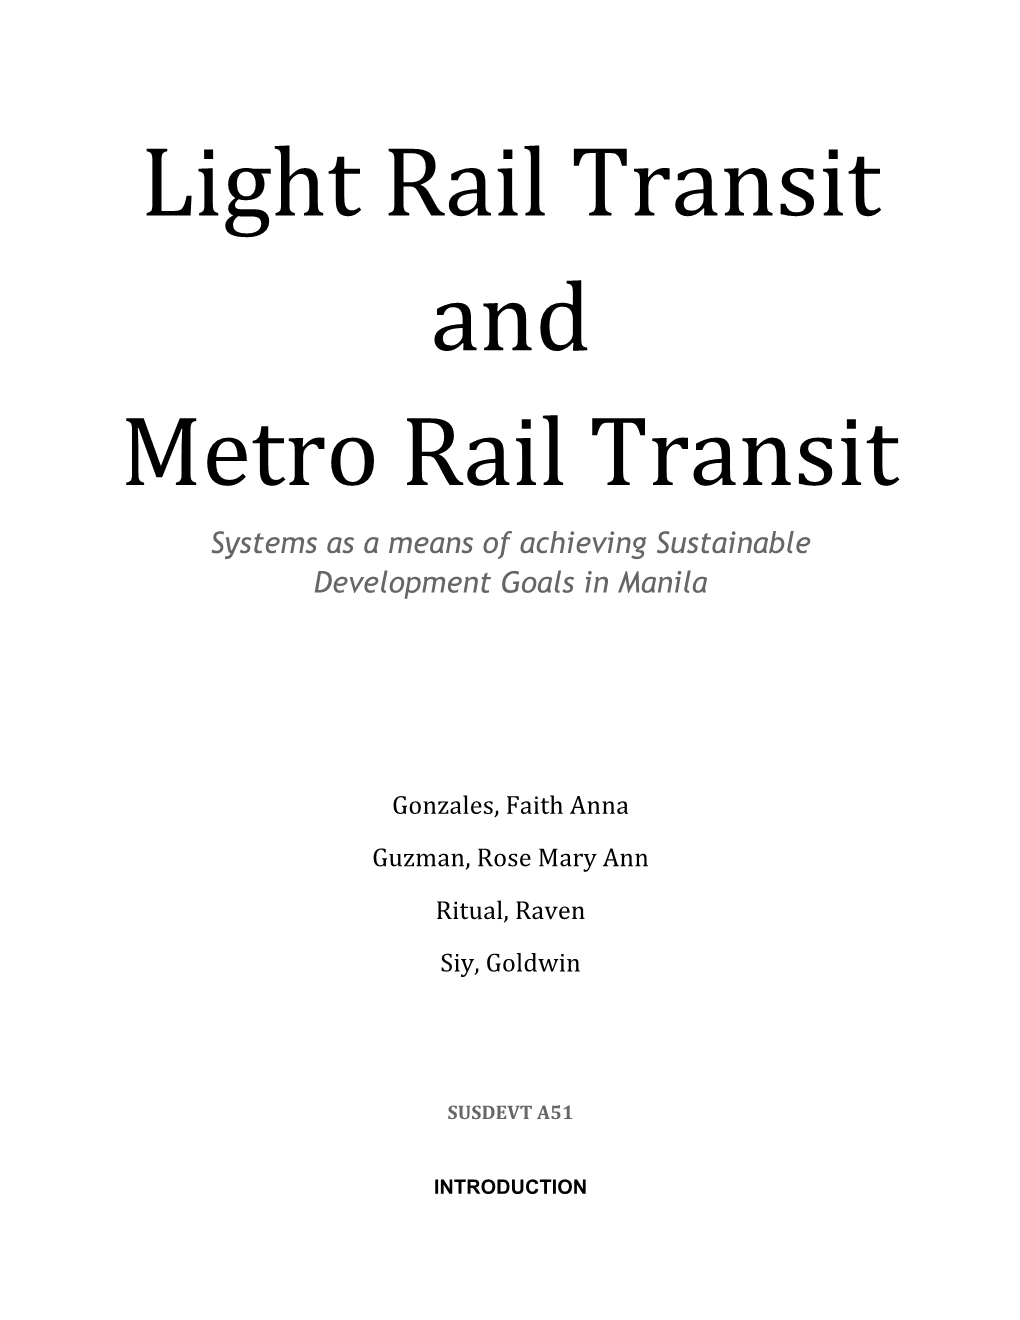 Light Rail Transit and Metro Rail Transit